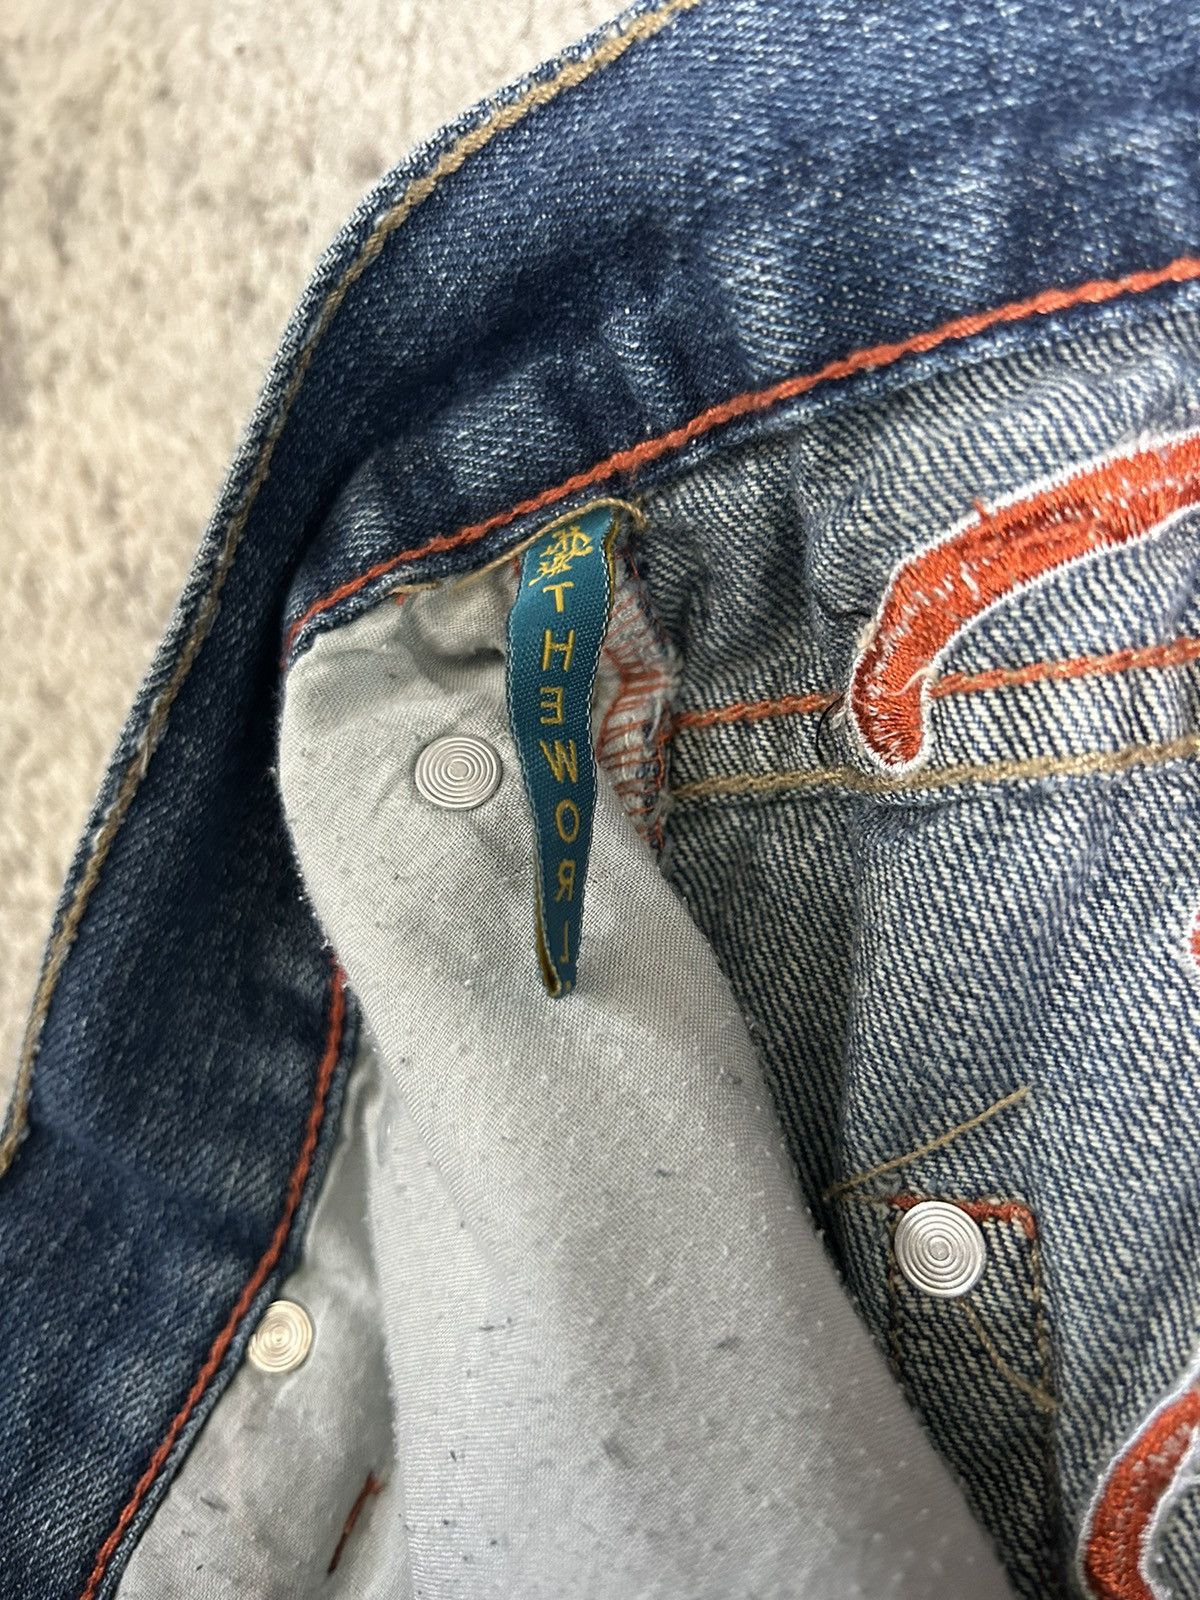 Christian Audigier 2000s Christian Audigier Embroidered Jeans Size US 34 / EU 50 - 5 Thumbnail